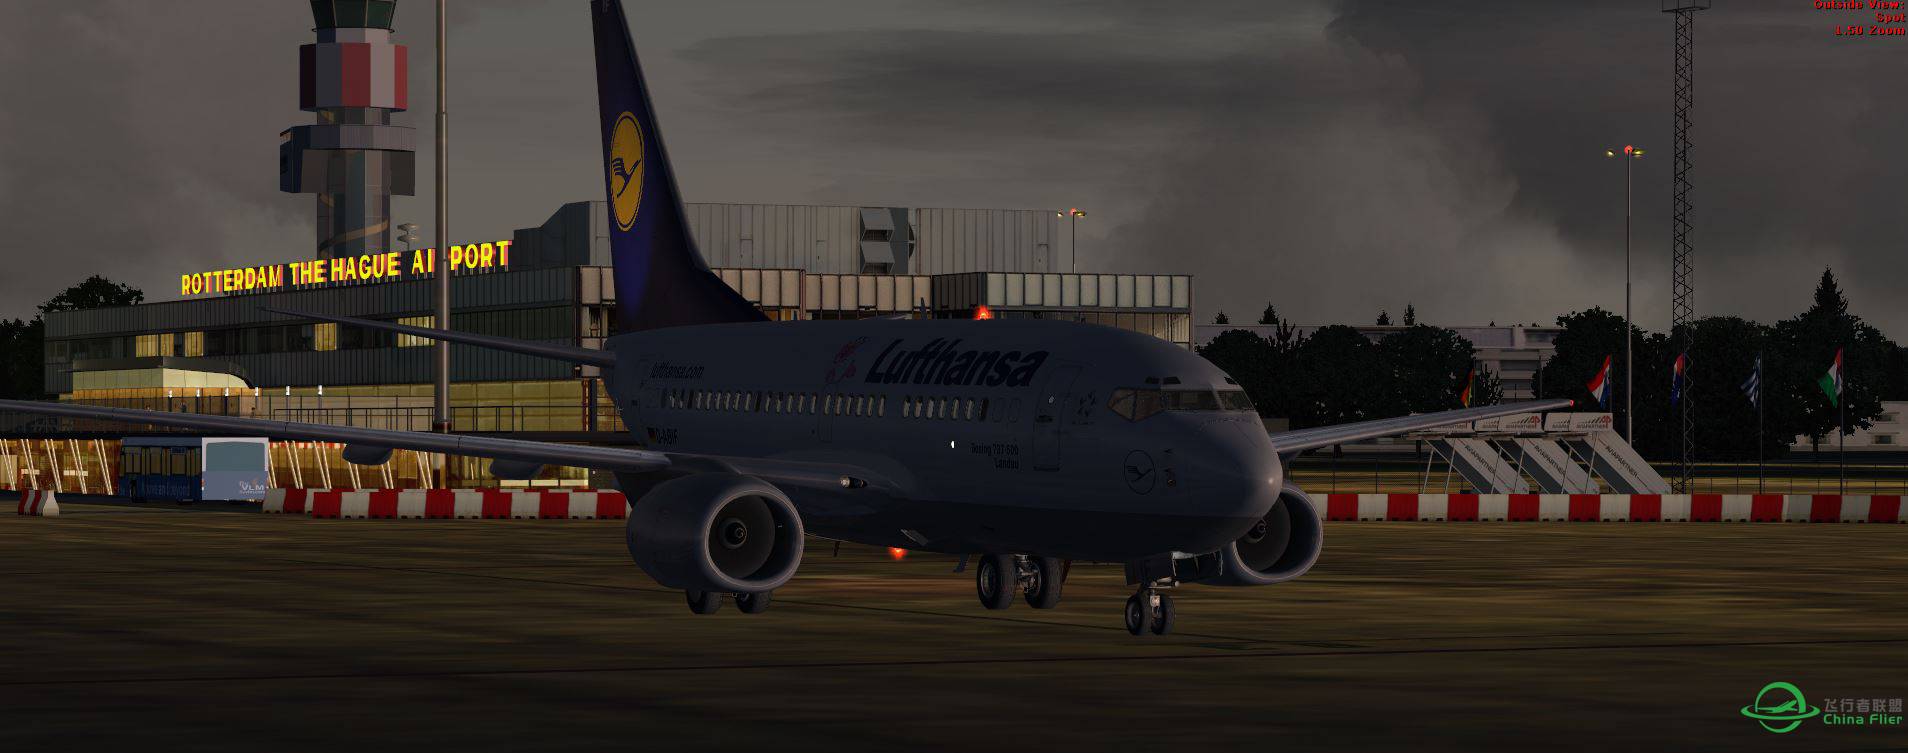 B737 Lufthansa-5551 